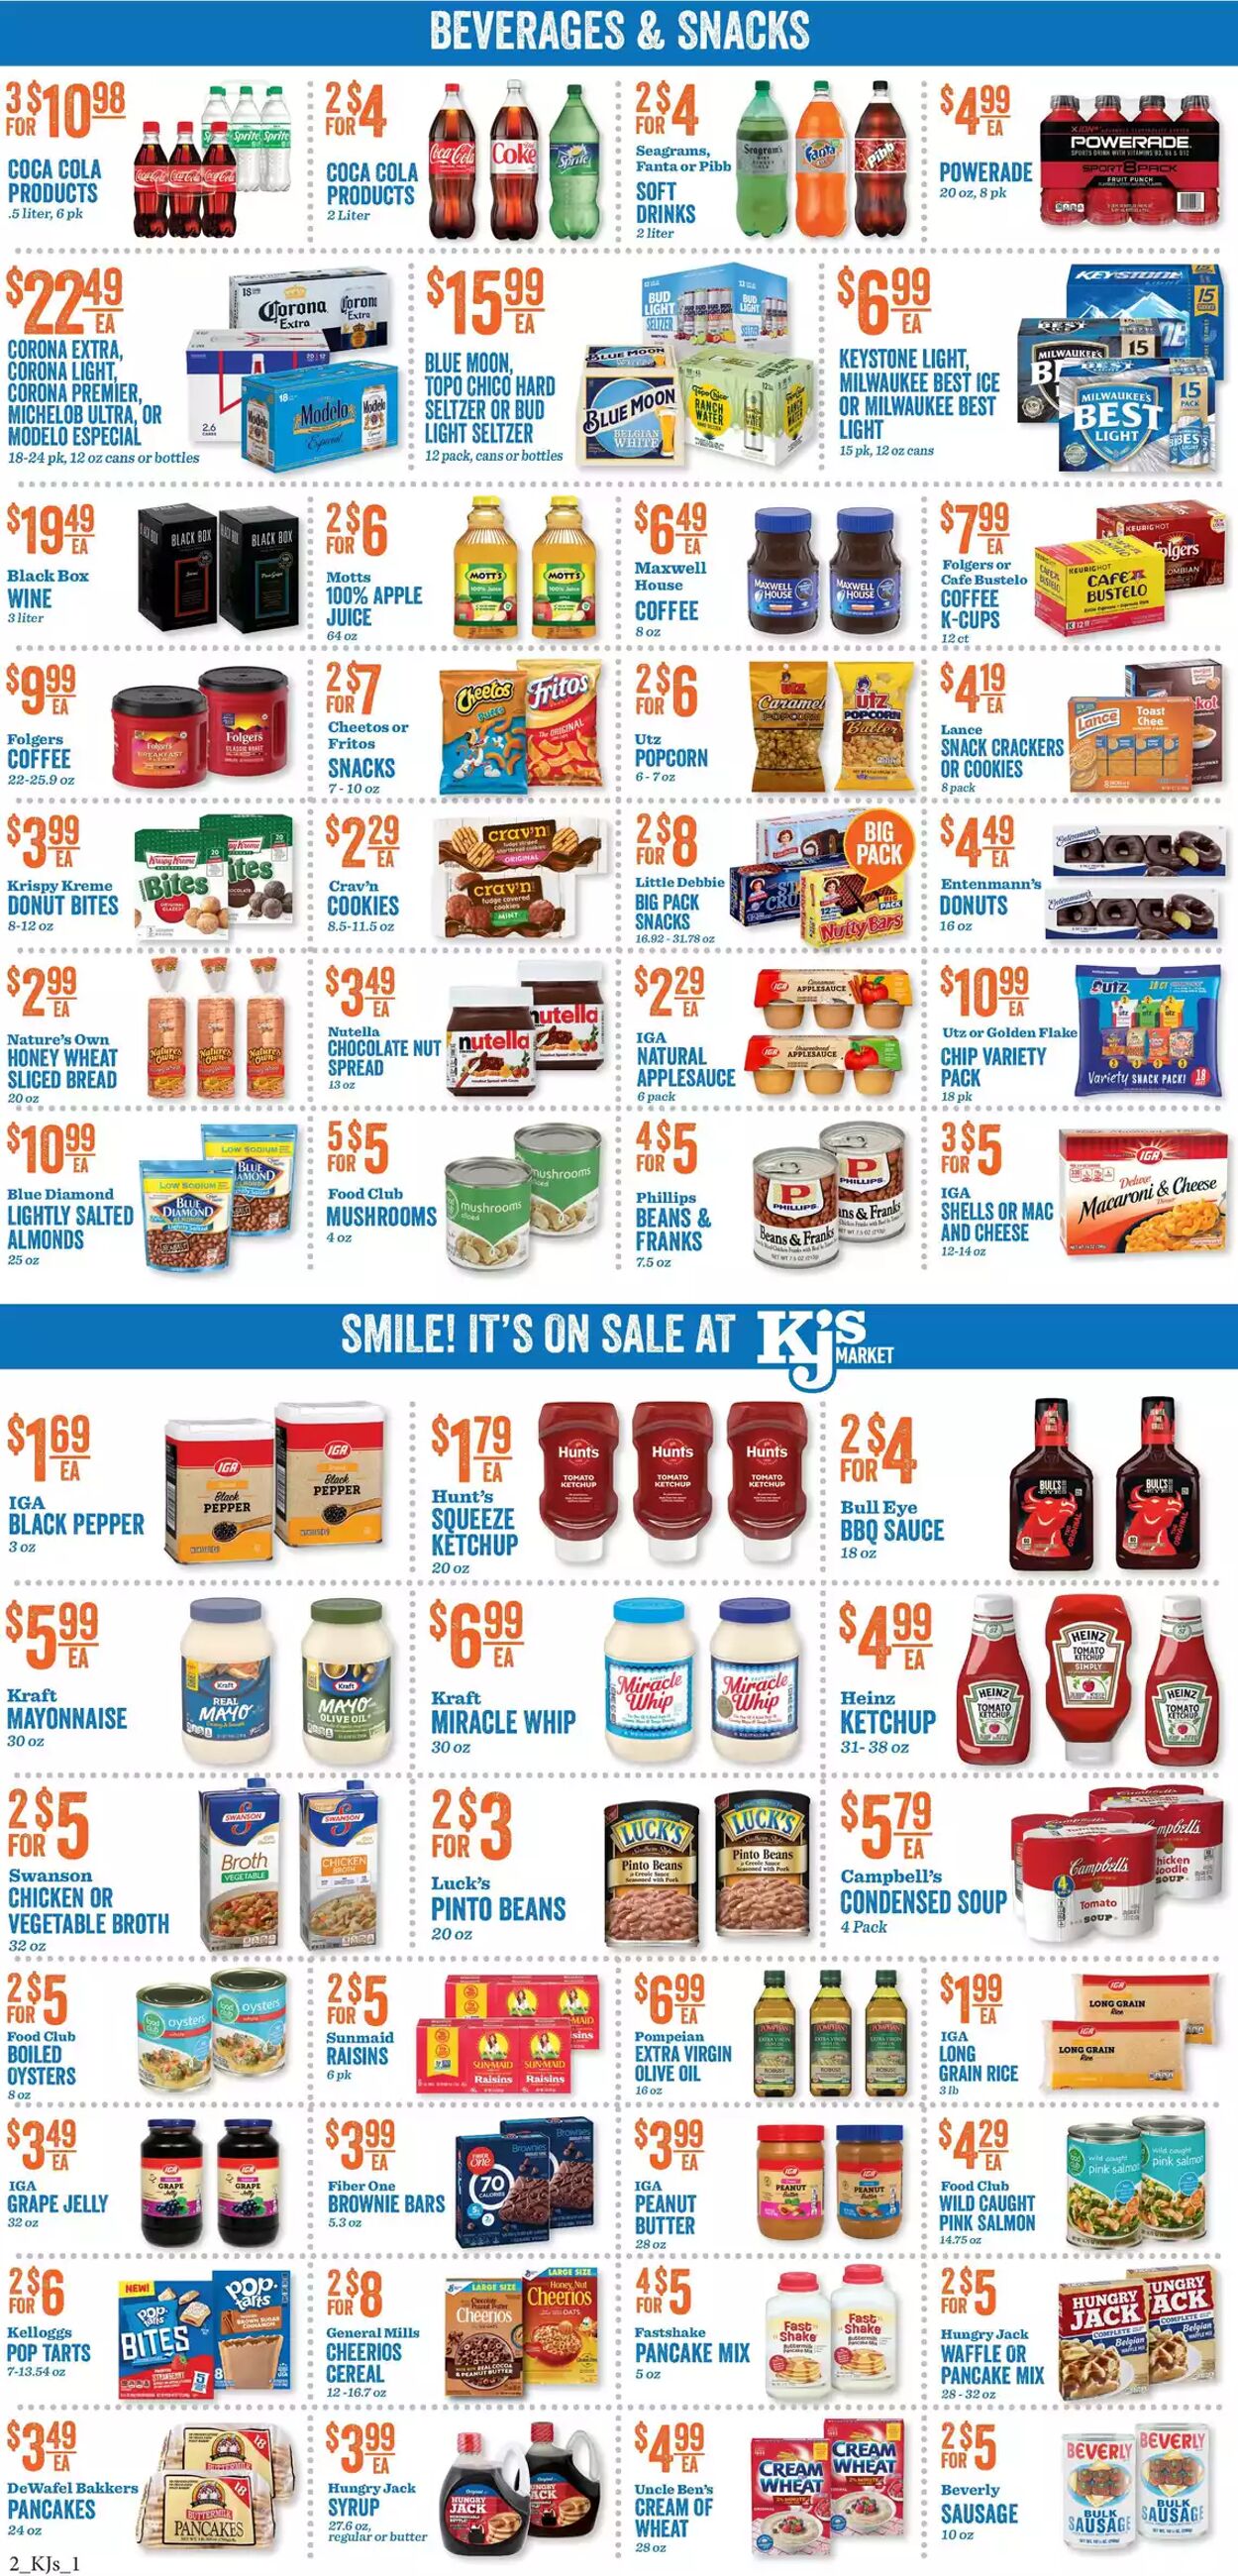 Weekly ad KJ's Market 03/01/2023 - 03/07/2023